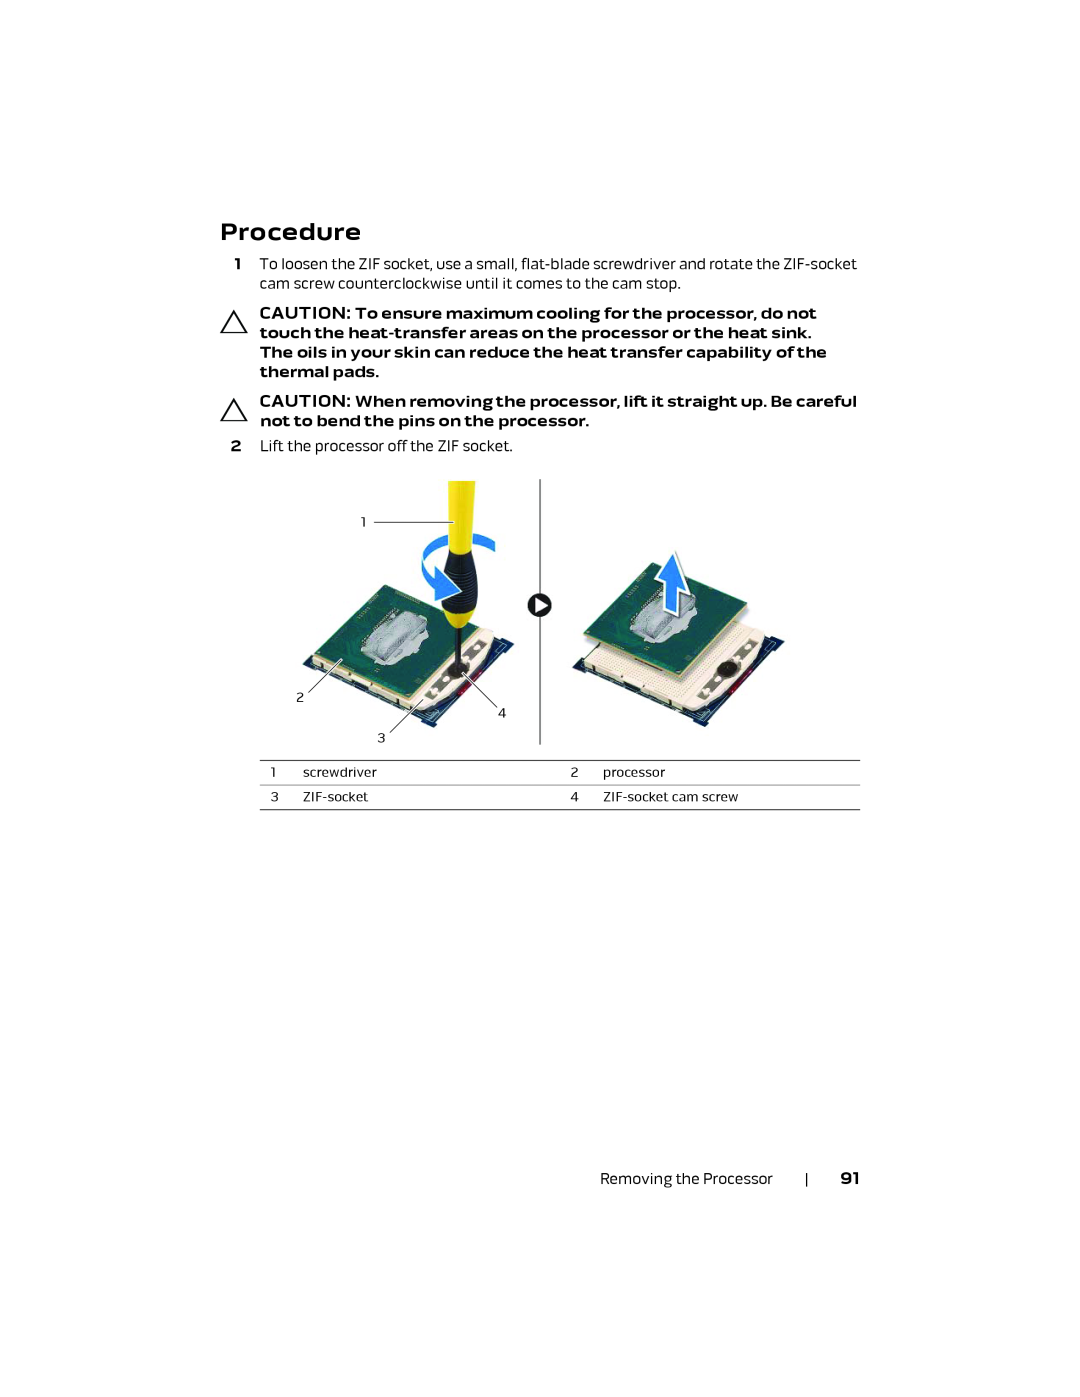 Alienware 17 R1, P18E owner manual Procedure, screwdriver, processor, ZIF-socket cam screw 